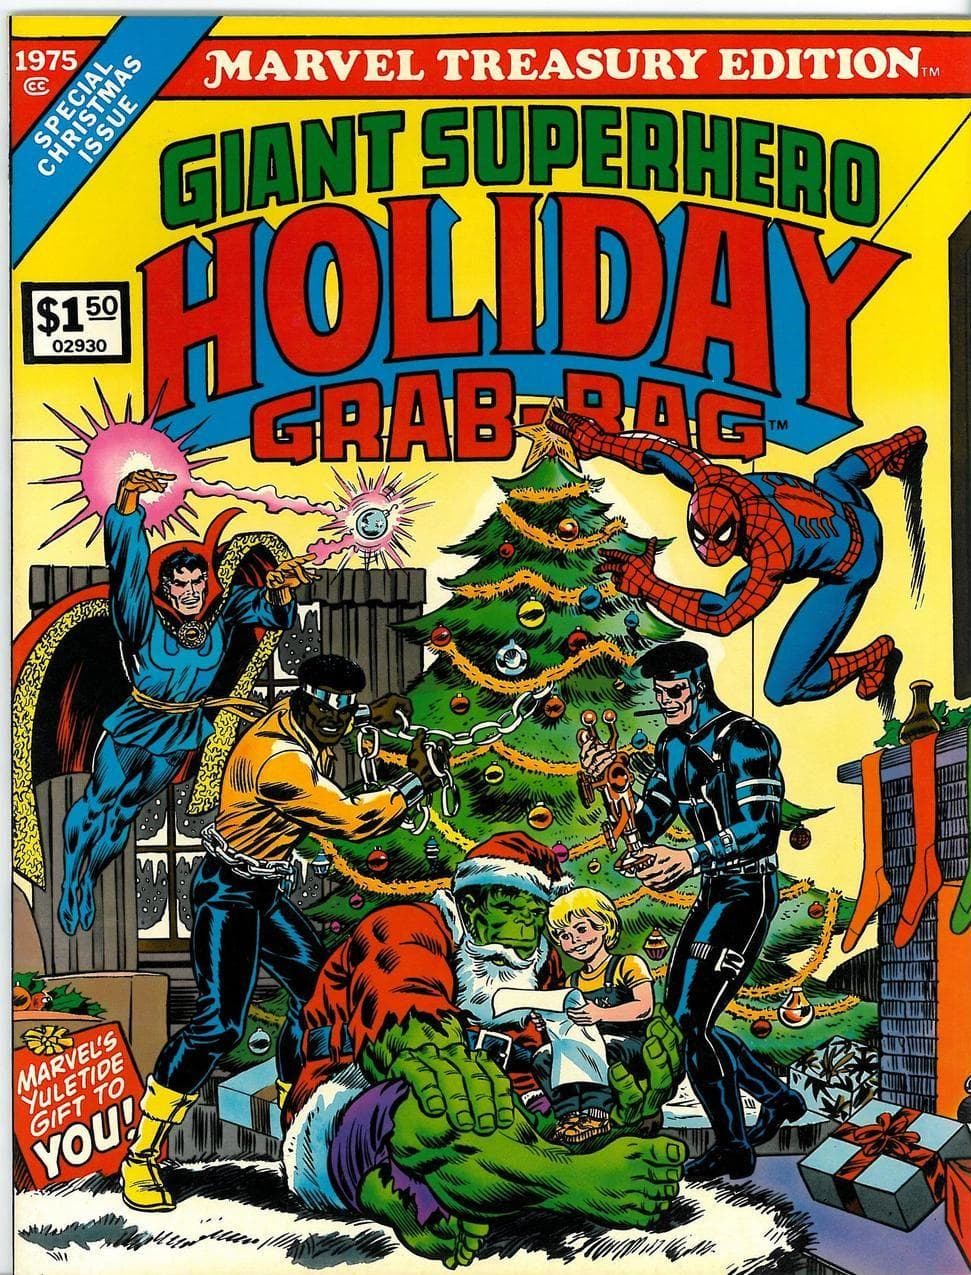 Rockin' Around the Christmas Tree on Random Awesome Christmas Superhero Comics You Never Knew Existed